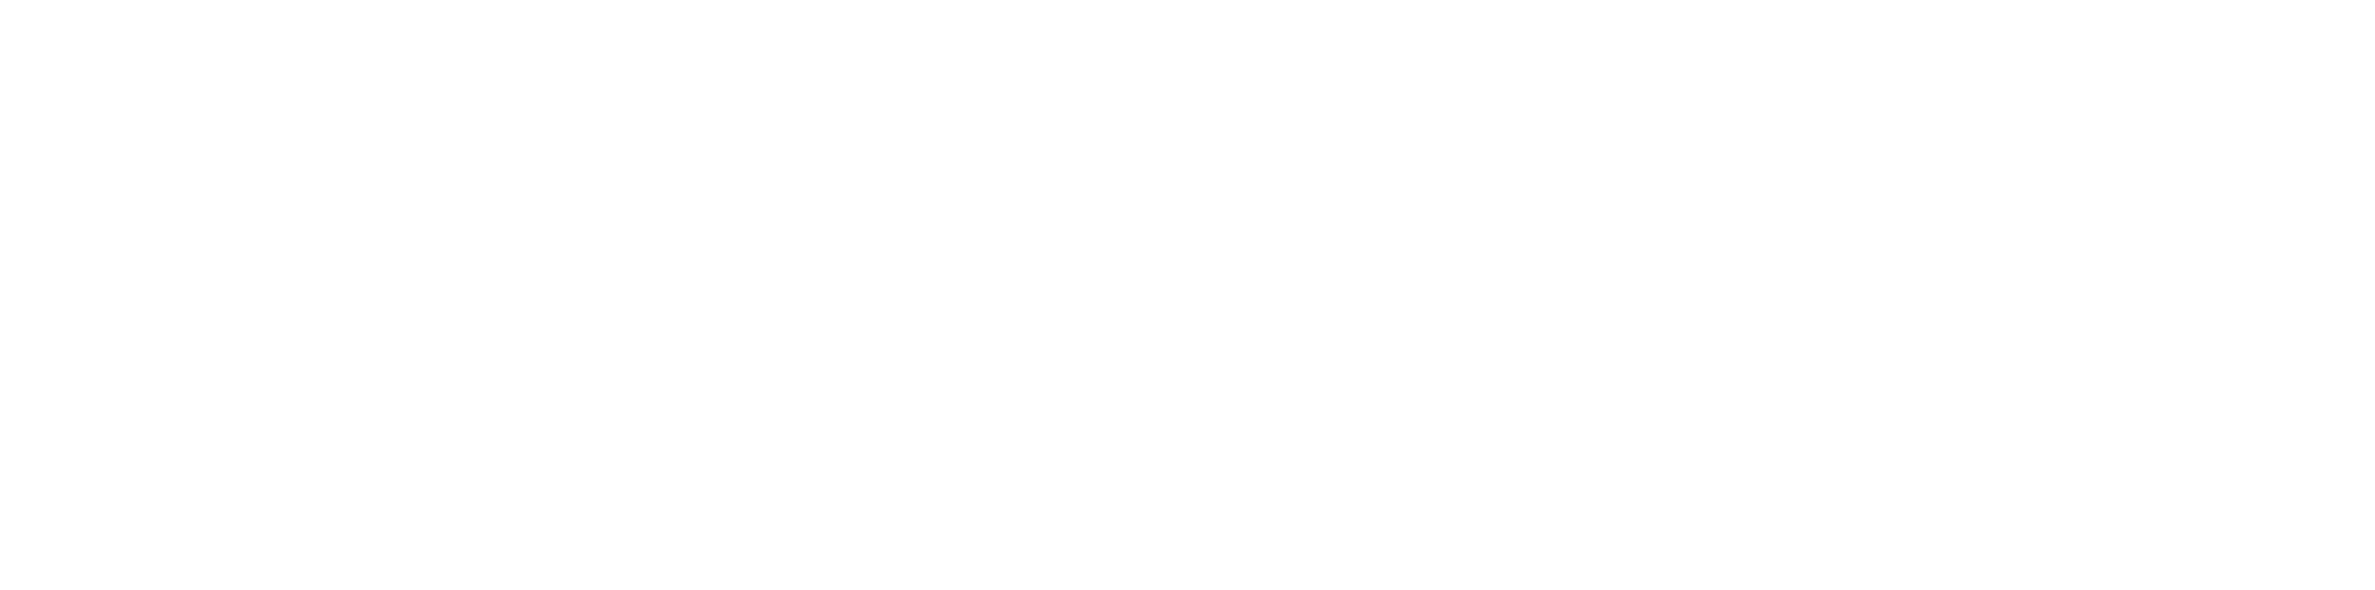 Edelweiss Analytics_White